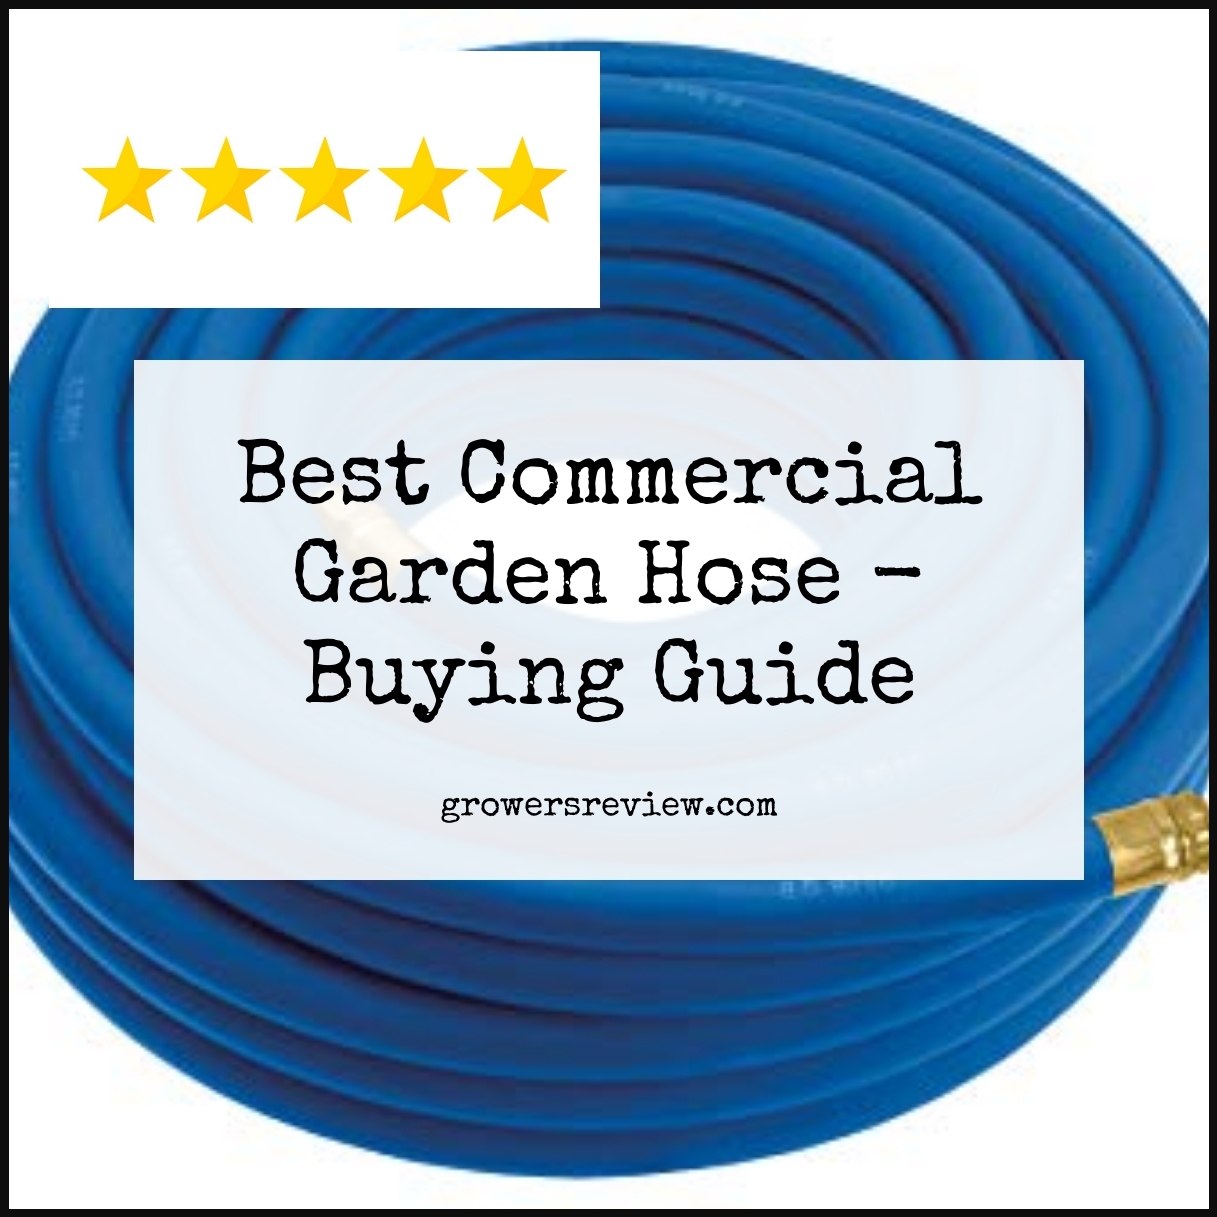 Best Commercial Garden Hose - Buying Guide